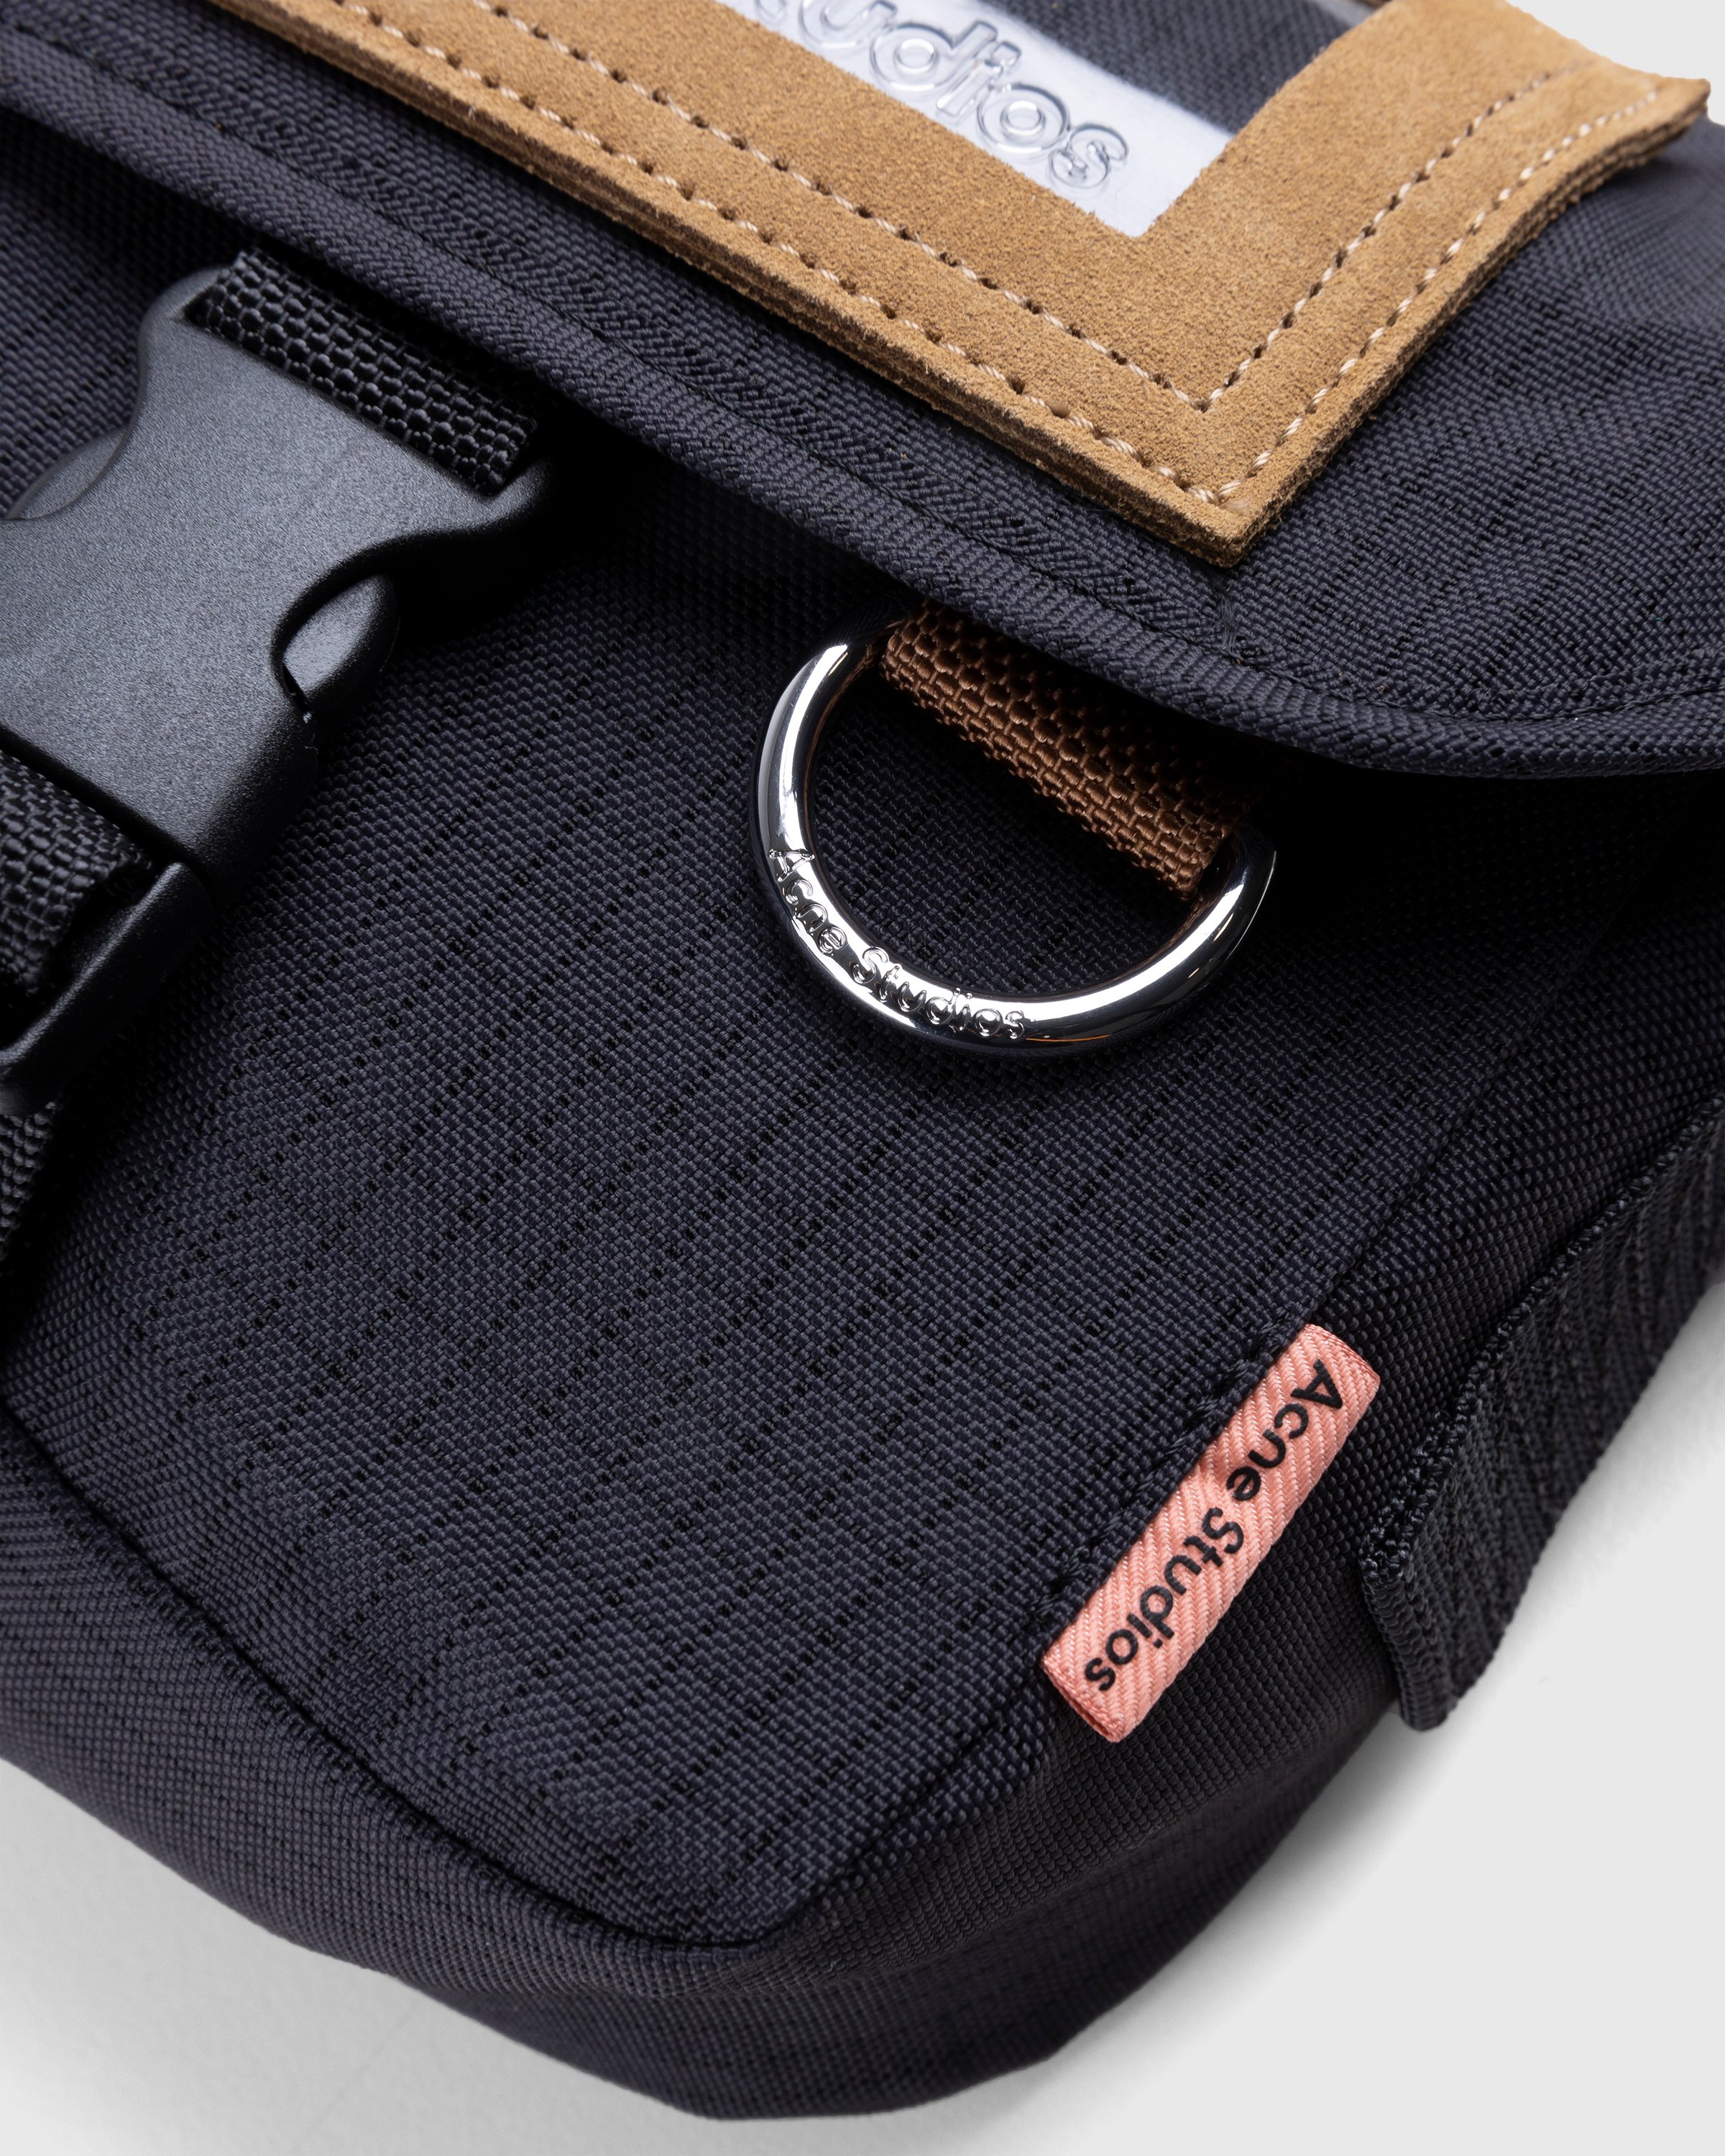 Acne Studios - Mini Messenger Bag Black - Accessories - Black - Image 3